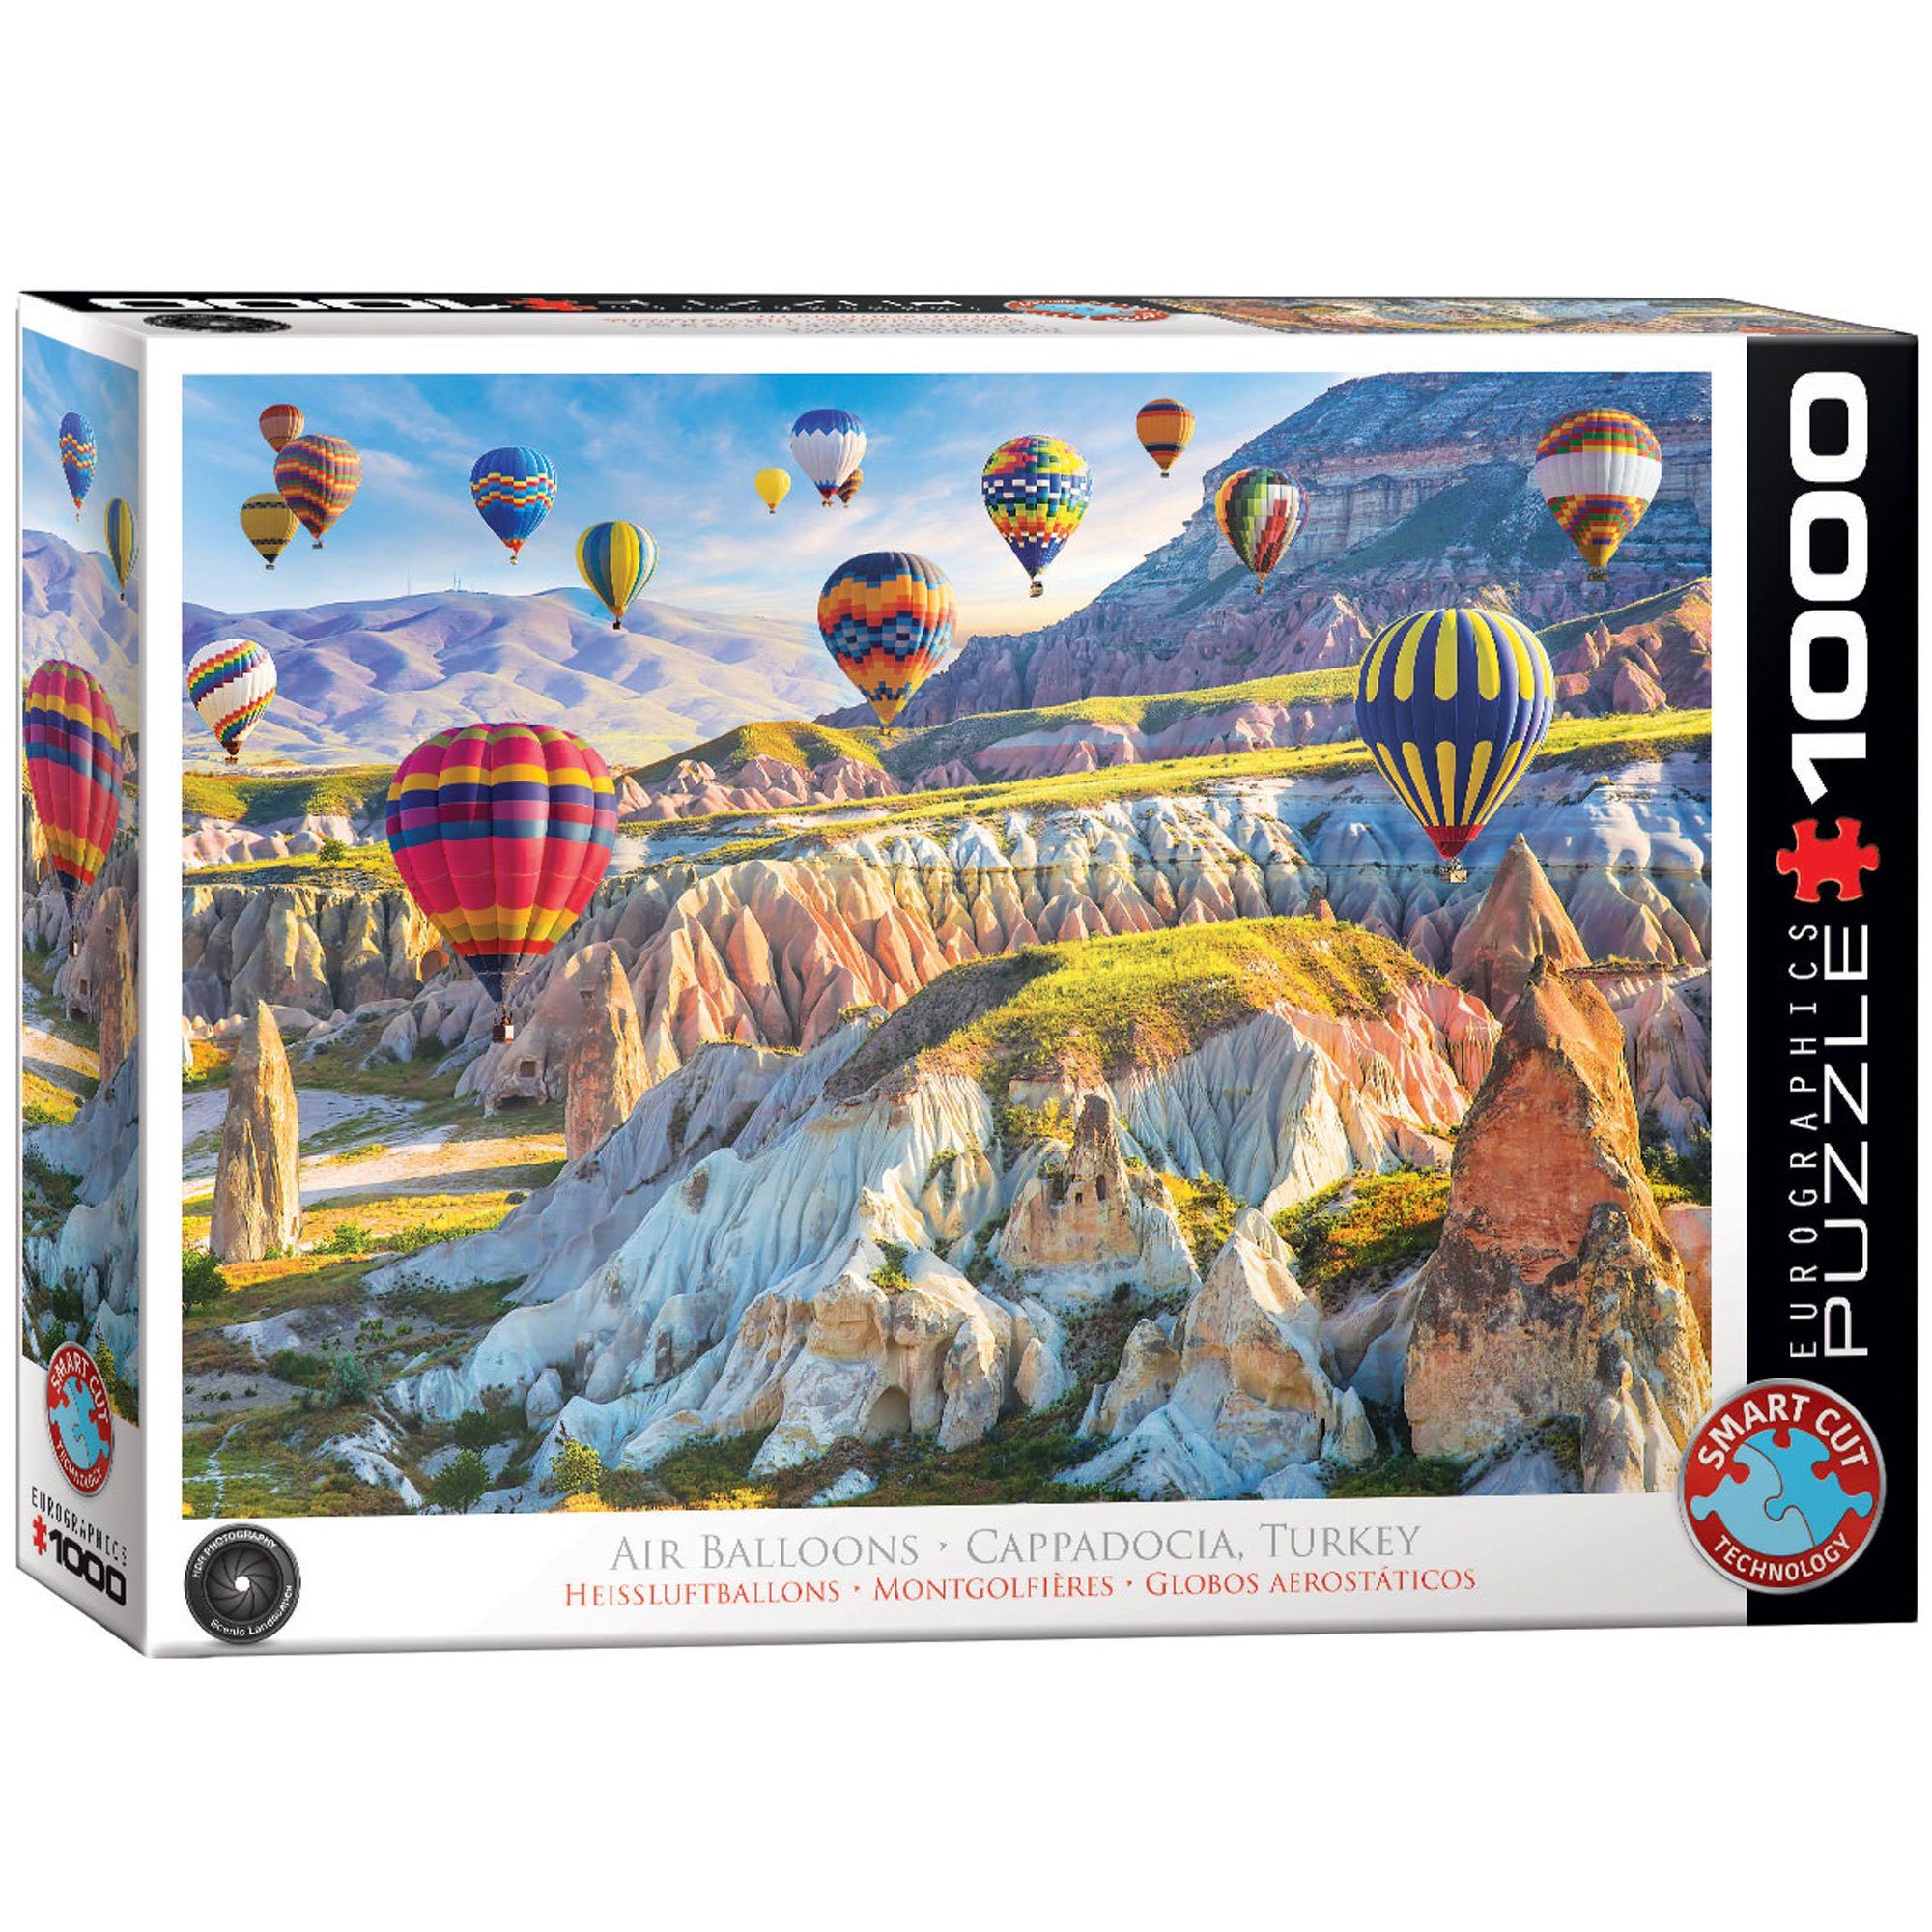 Puzzleteile Puzzle cm, 68x48 empireposter Türkei Puzzle Teile 1000 Heißfluftballons - Capadoccia -